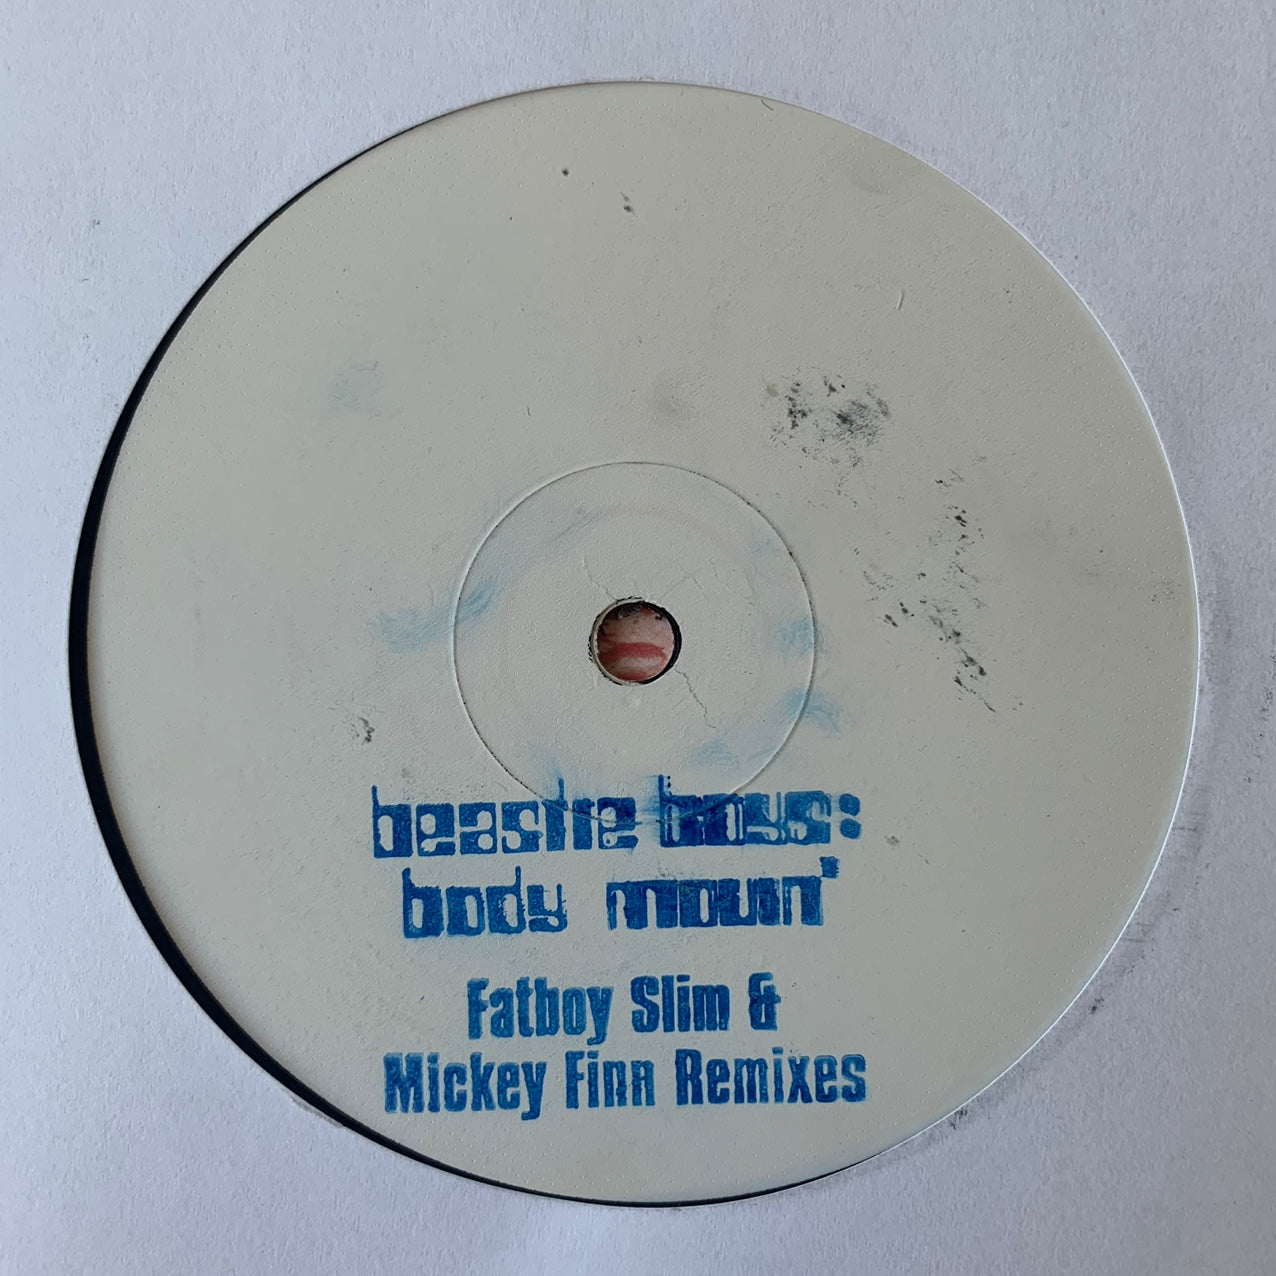 Beastie Boys “Body Movin’” Fatboy Slim & Micky Finn Remixes, 2 Track 12inch Vinyl